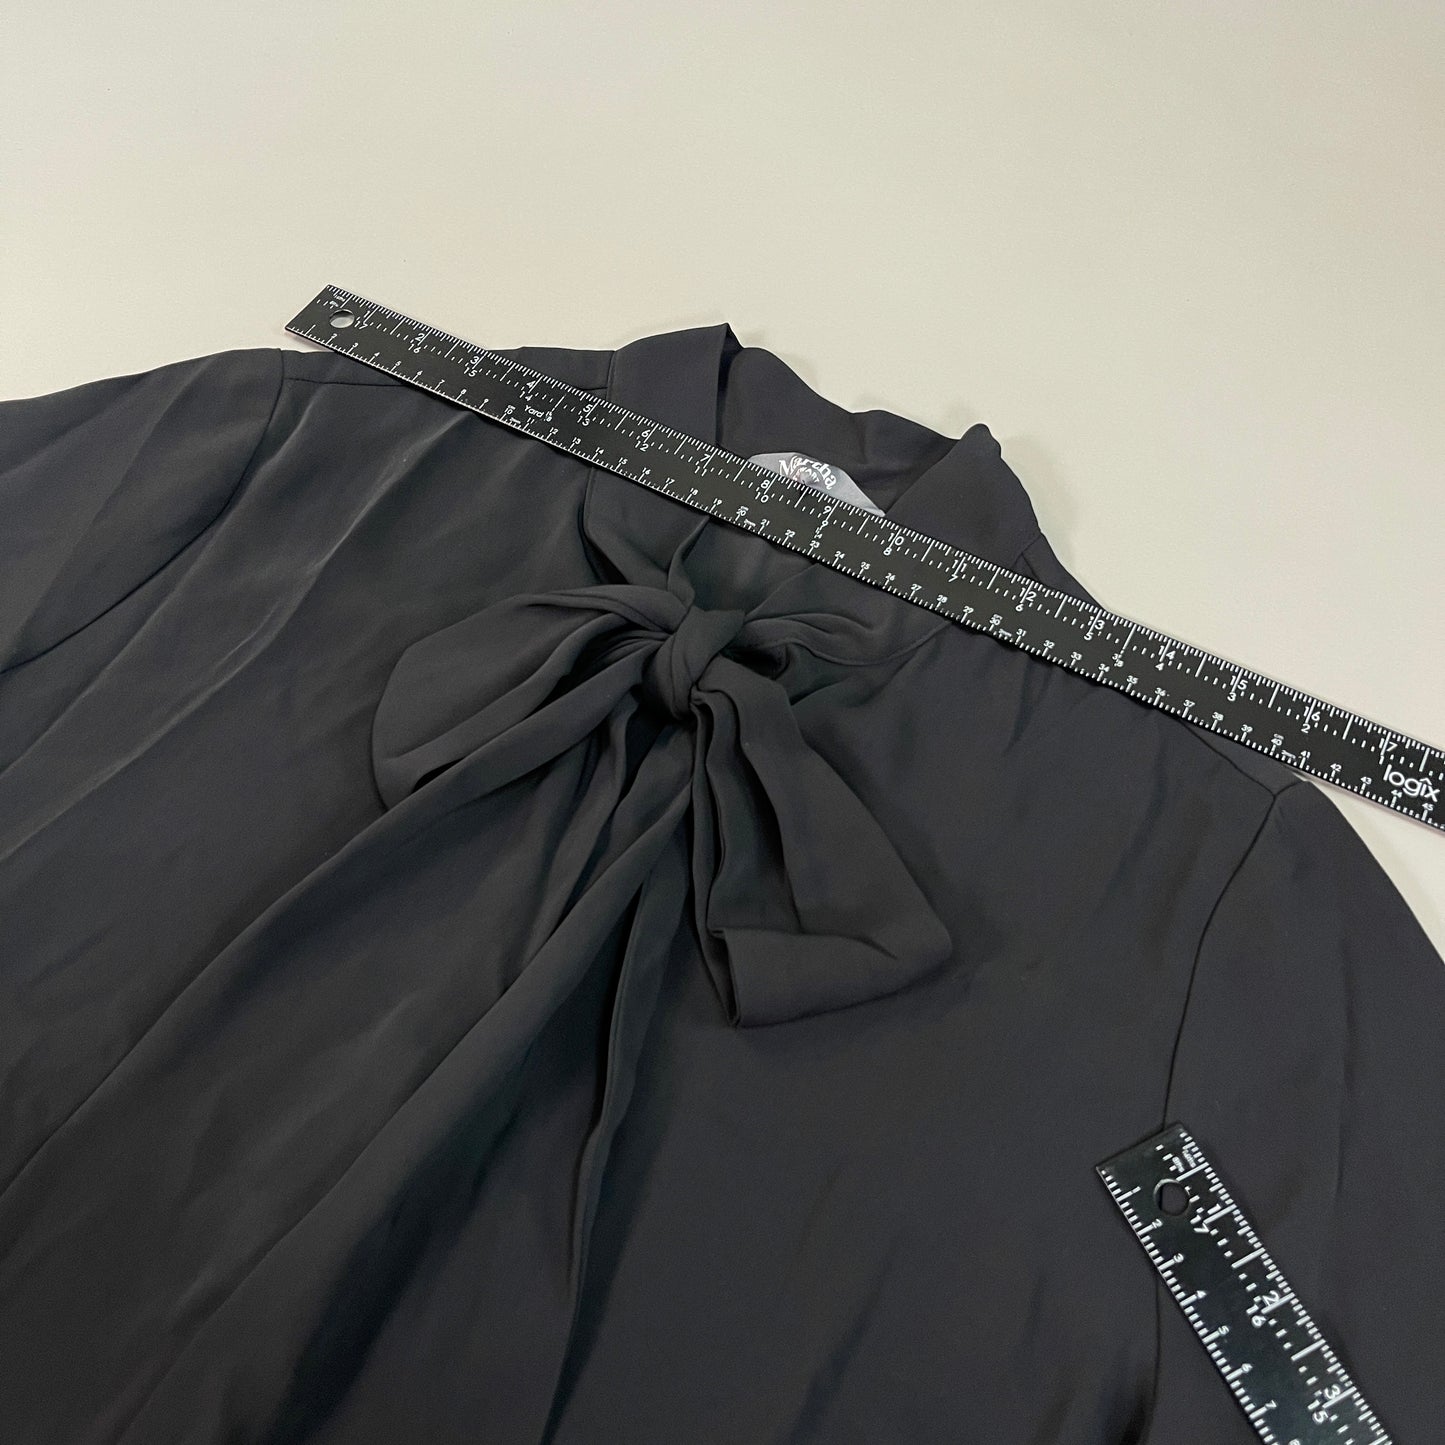 MARTHA STEWART Woven Front Button Blouse Top Tie Neck Women's Sz L Francesca Black (New)